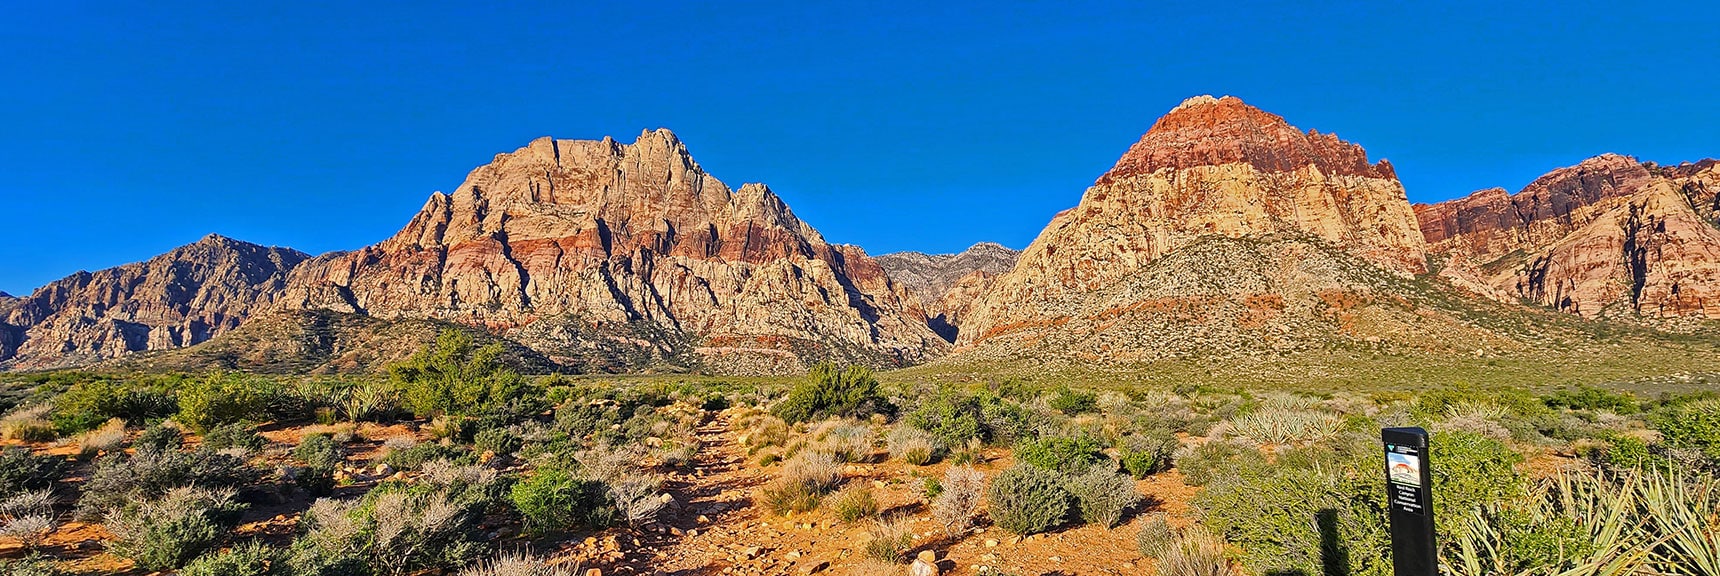 Continuing Up Oak Creek Canyon Trail Toward the Knoll Trailhead | Knoll Trail | Red Rock Canyon National Conservation Area, Nevada | David Smith | LasVegasAreaTrails.com